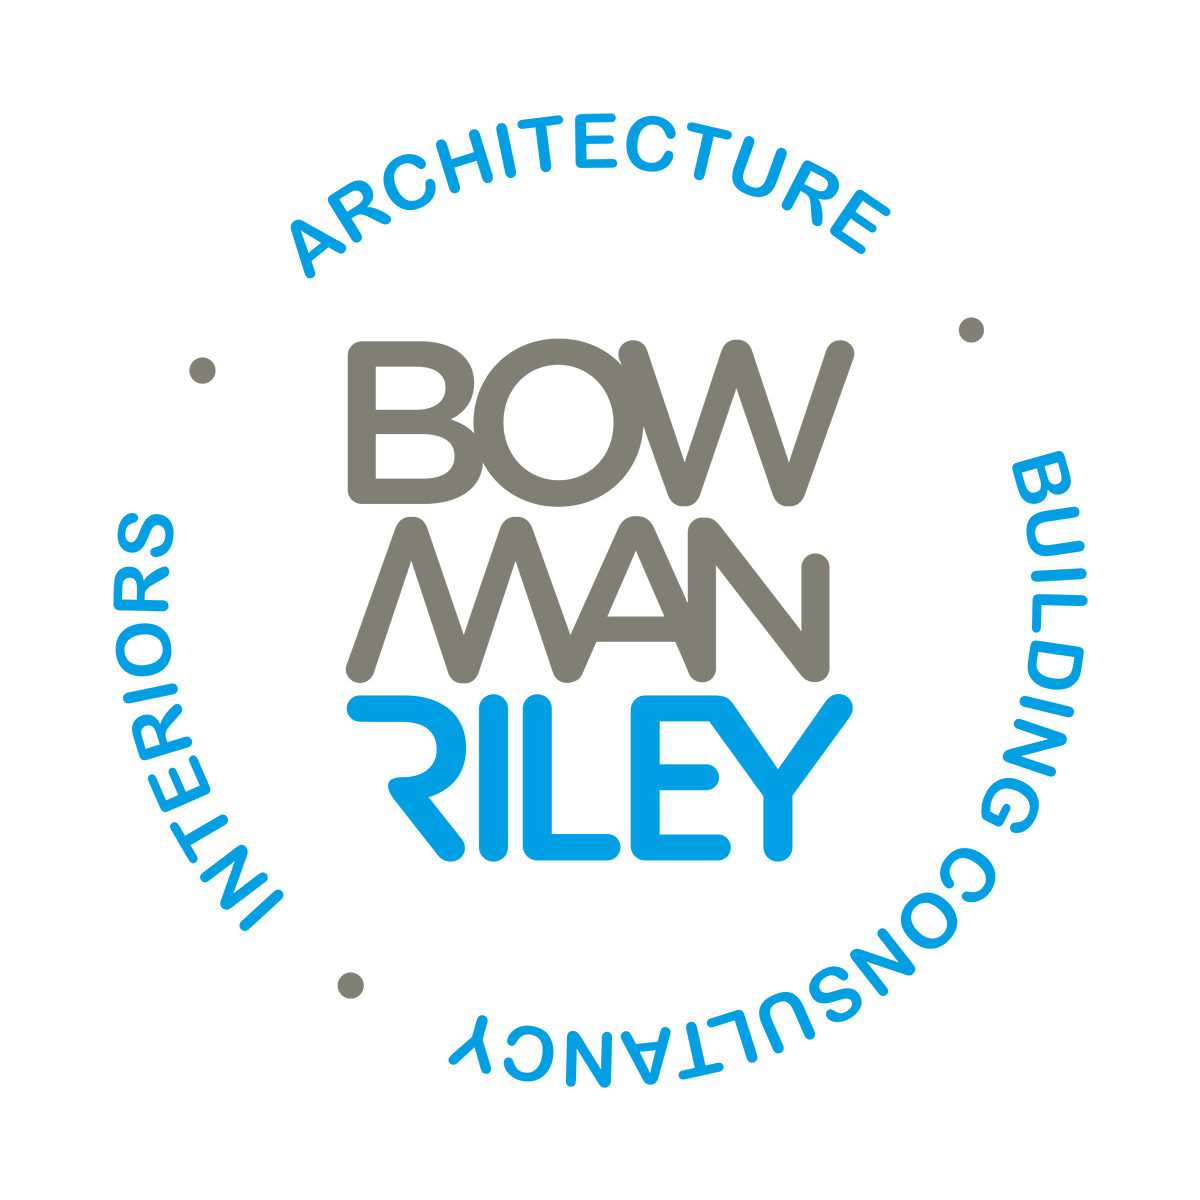 Bowman Riley logo